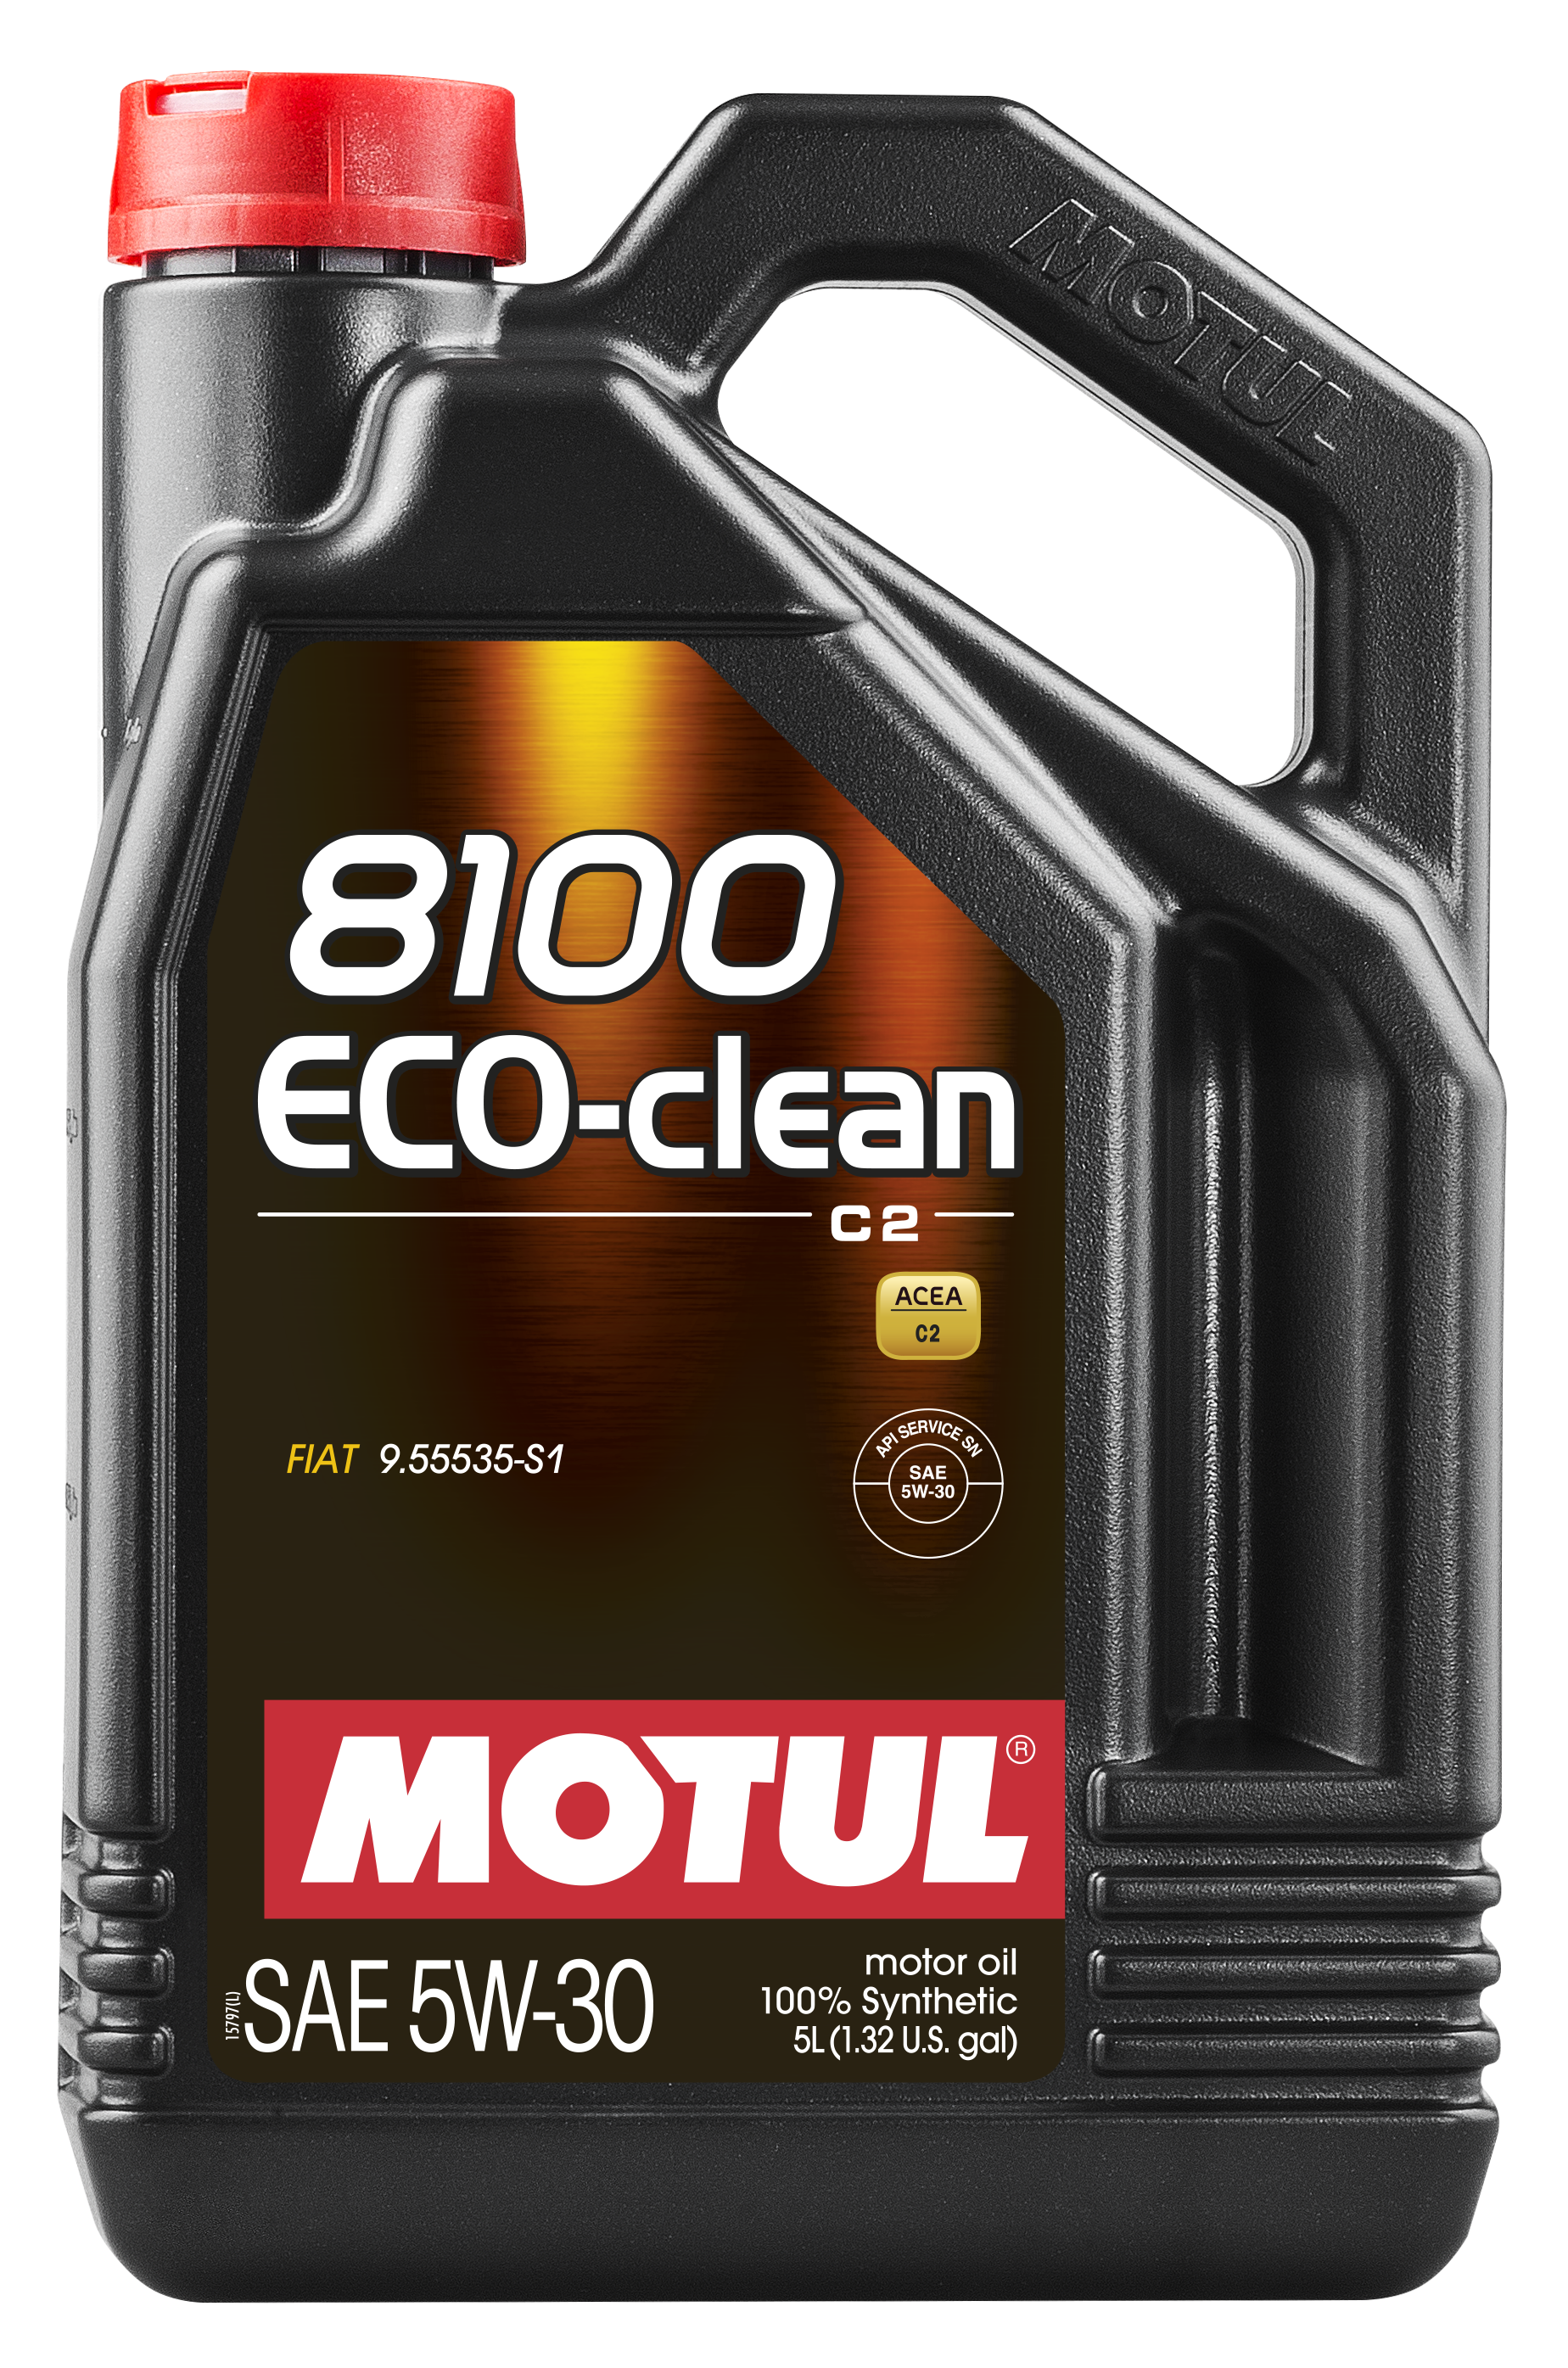 Motul 8100 Eco Clean